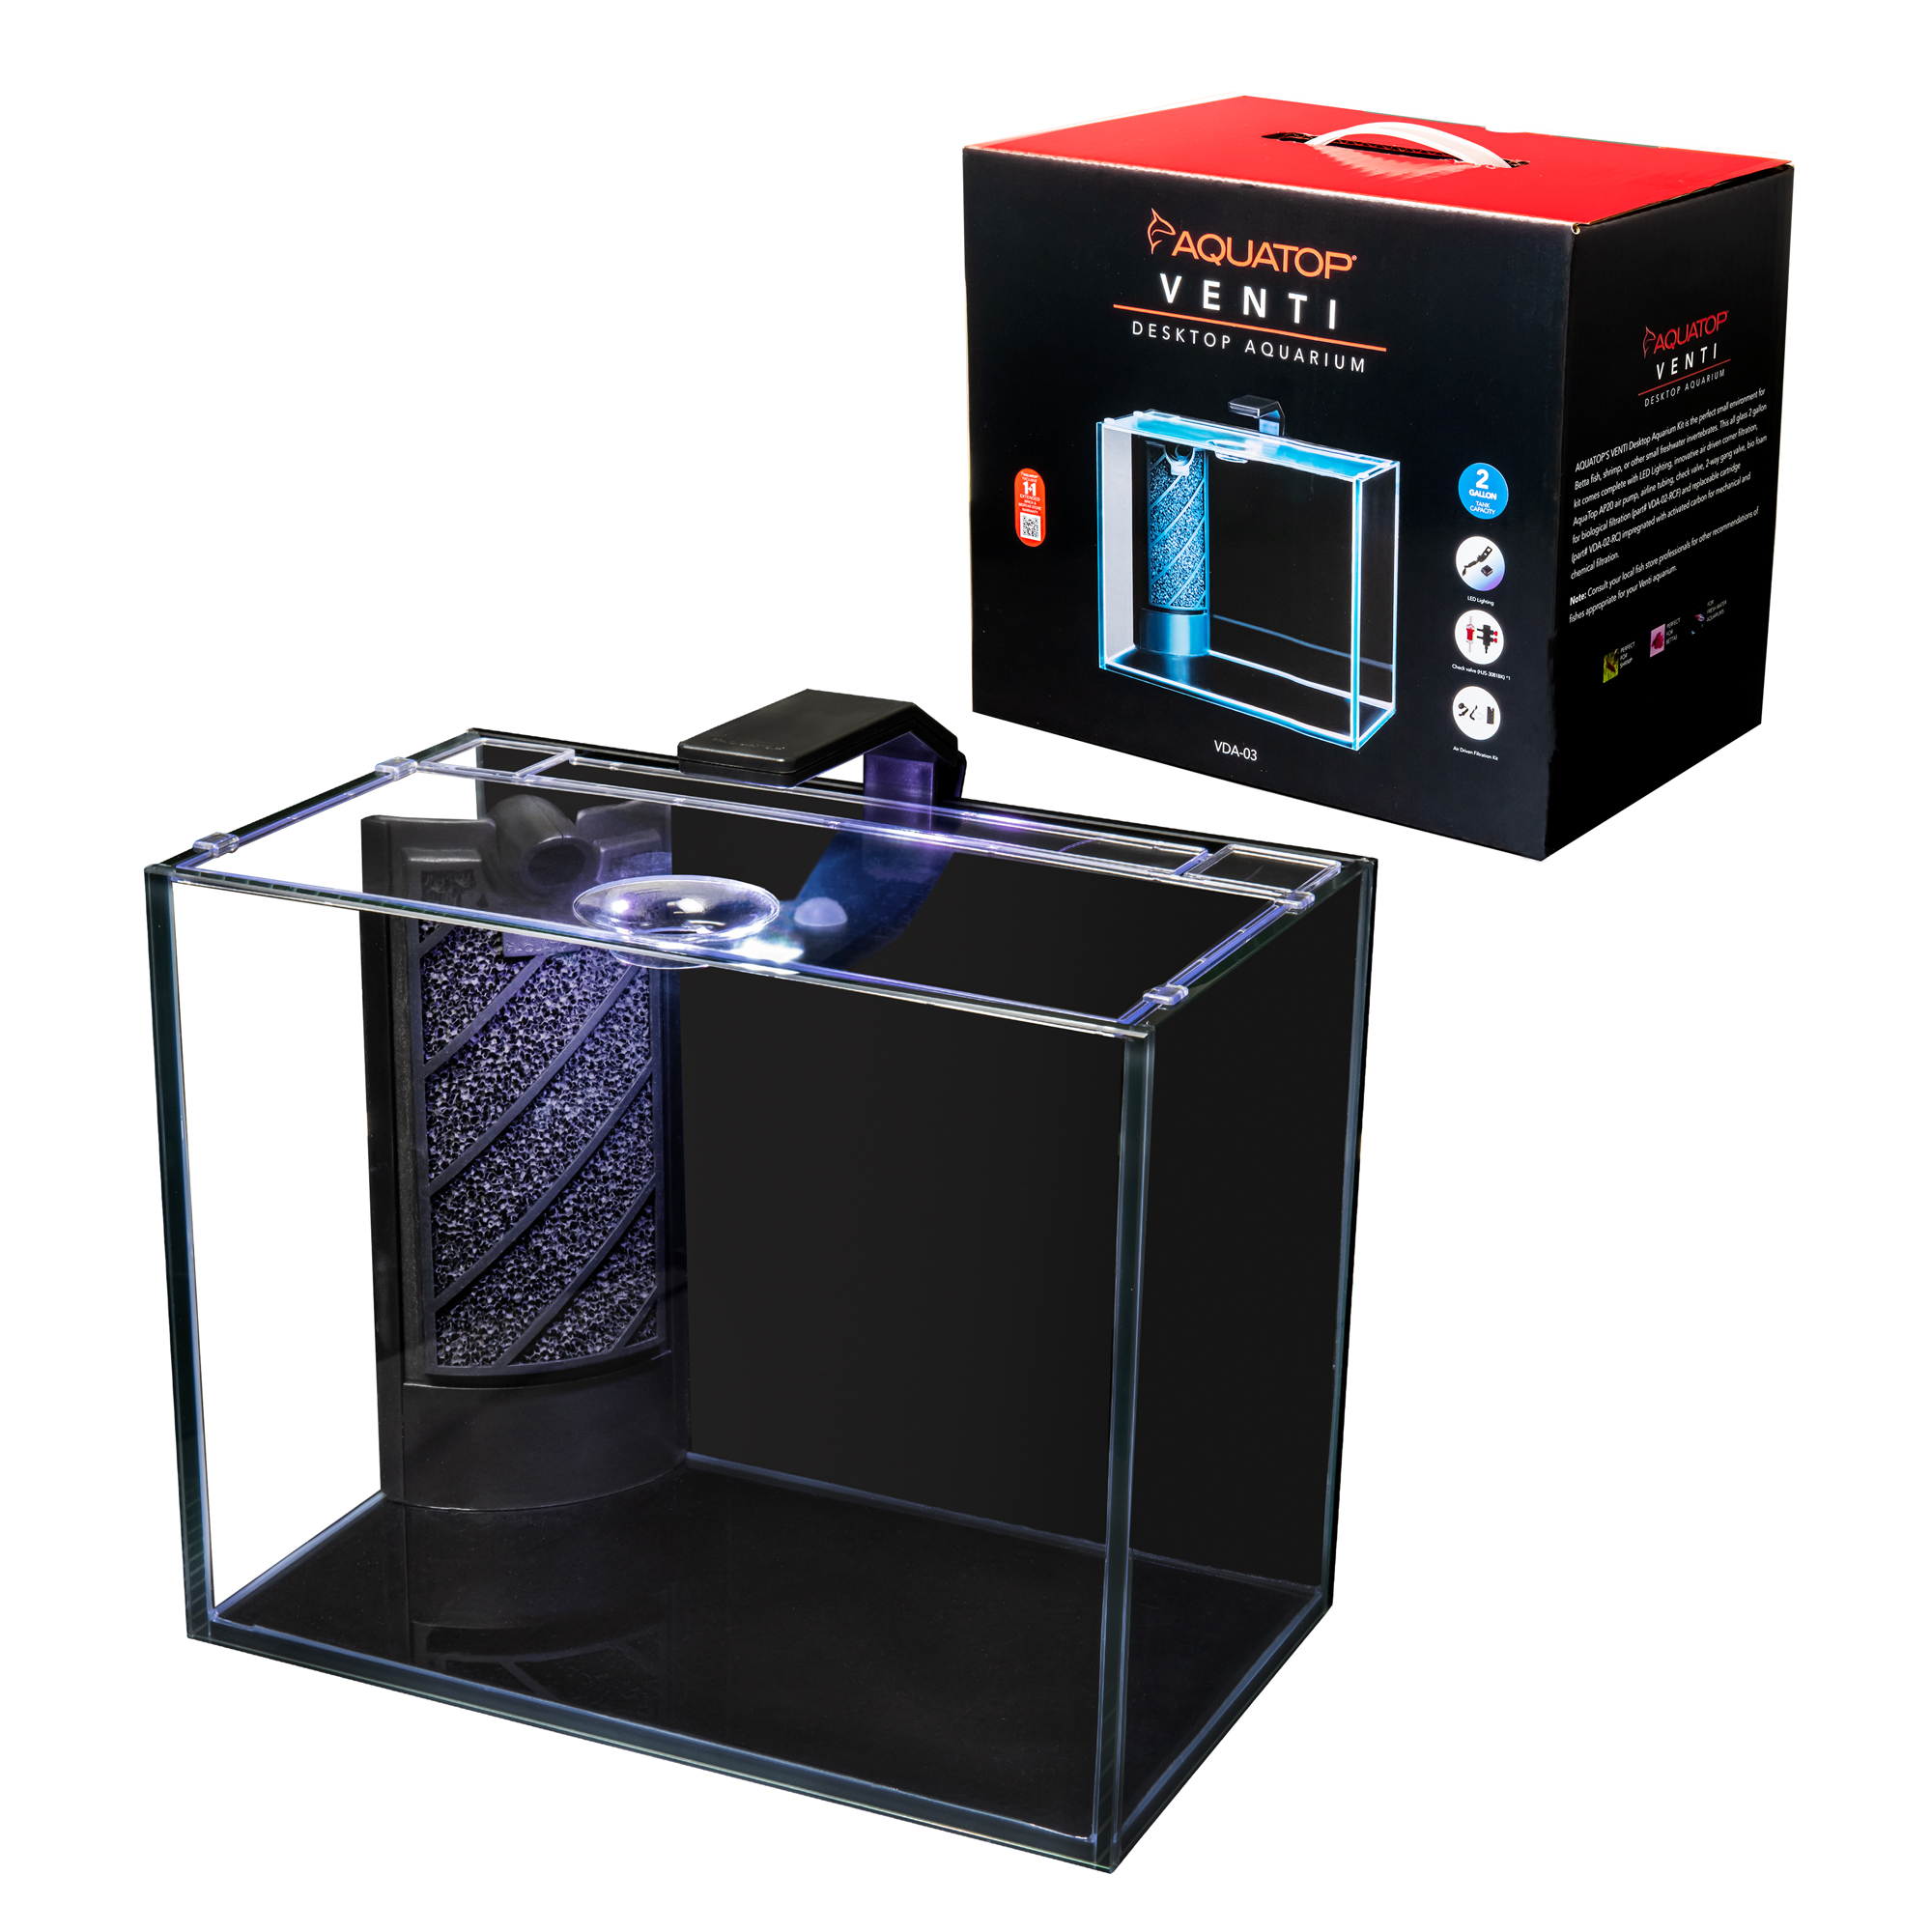 AQUATOP VDA-03 Venti Professional Showcase 2-Gallon Glass Aquarium Kit